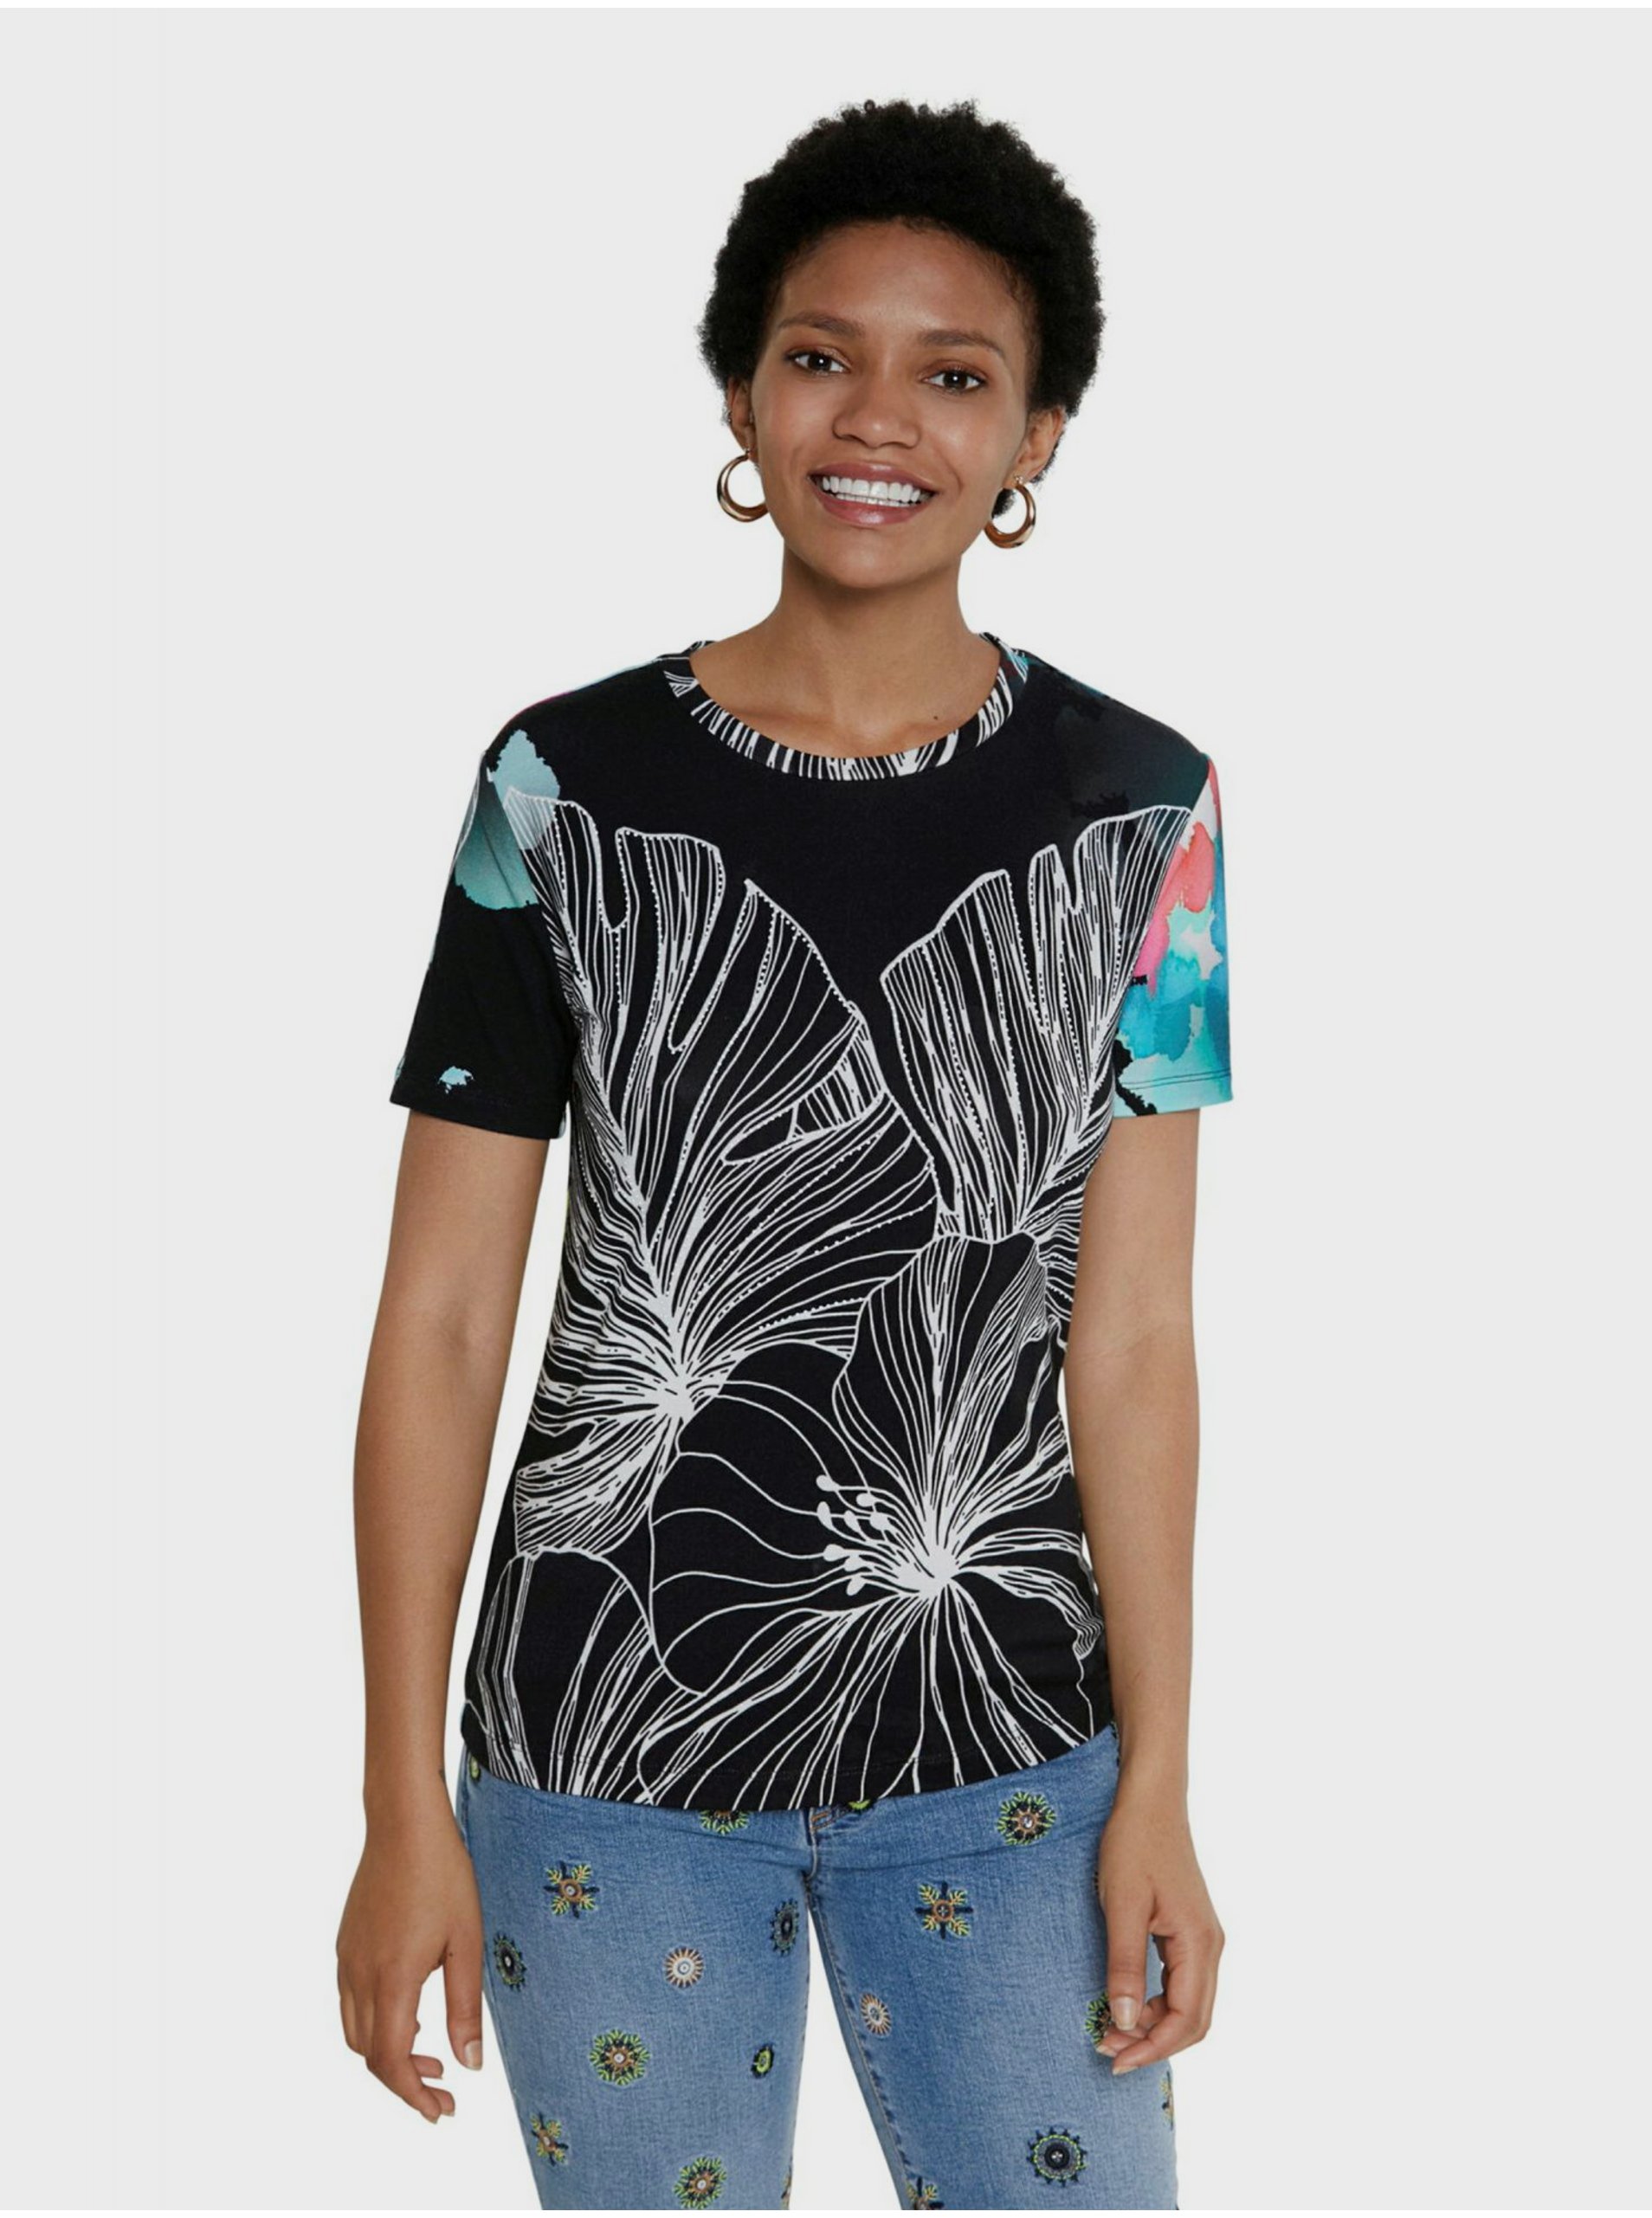 Black Desigual TS Leaves Women's Patterned T-Shirt - Women